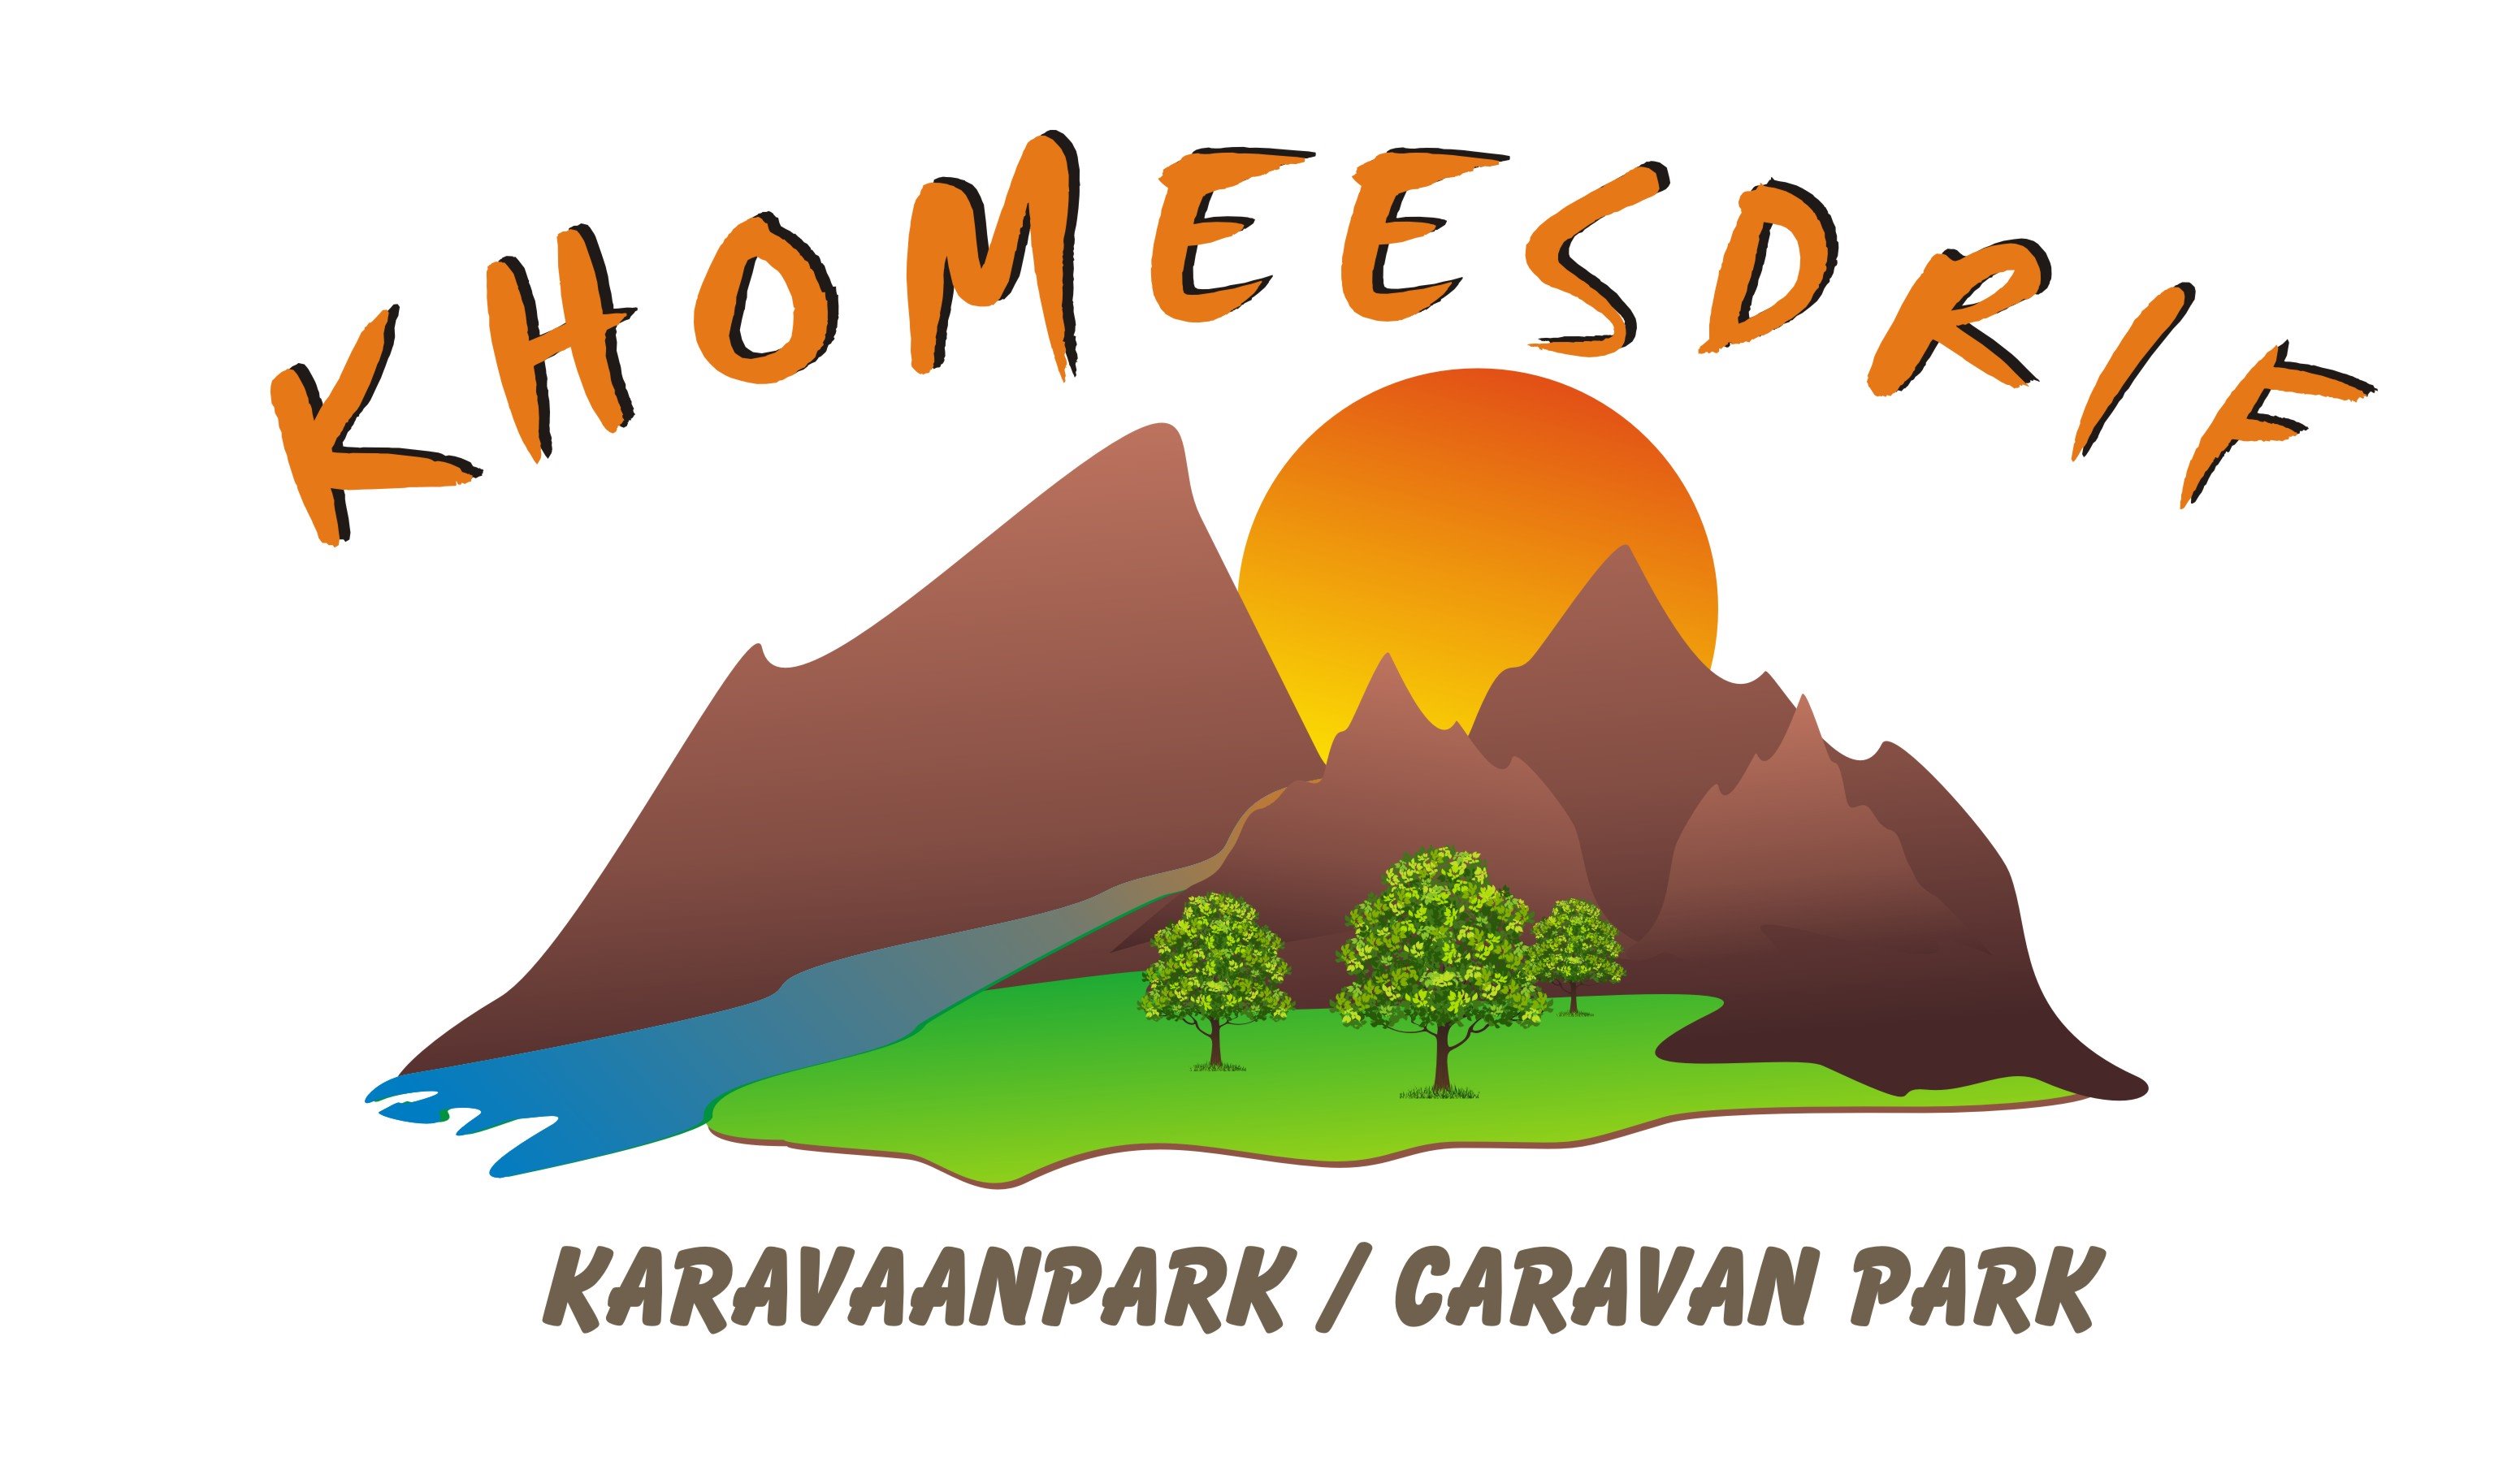 Khomeesdrif Camping Site